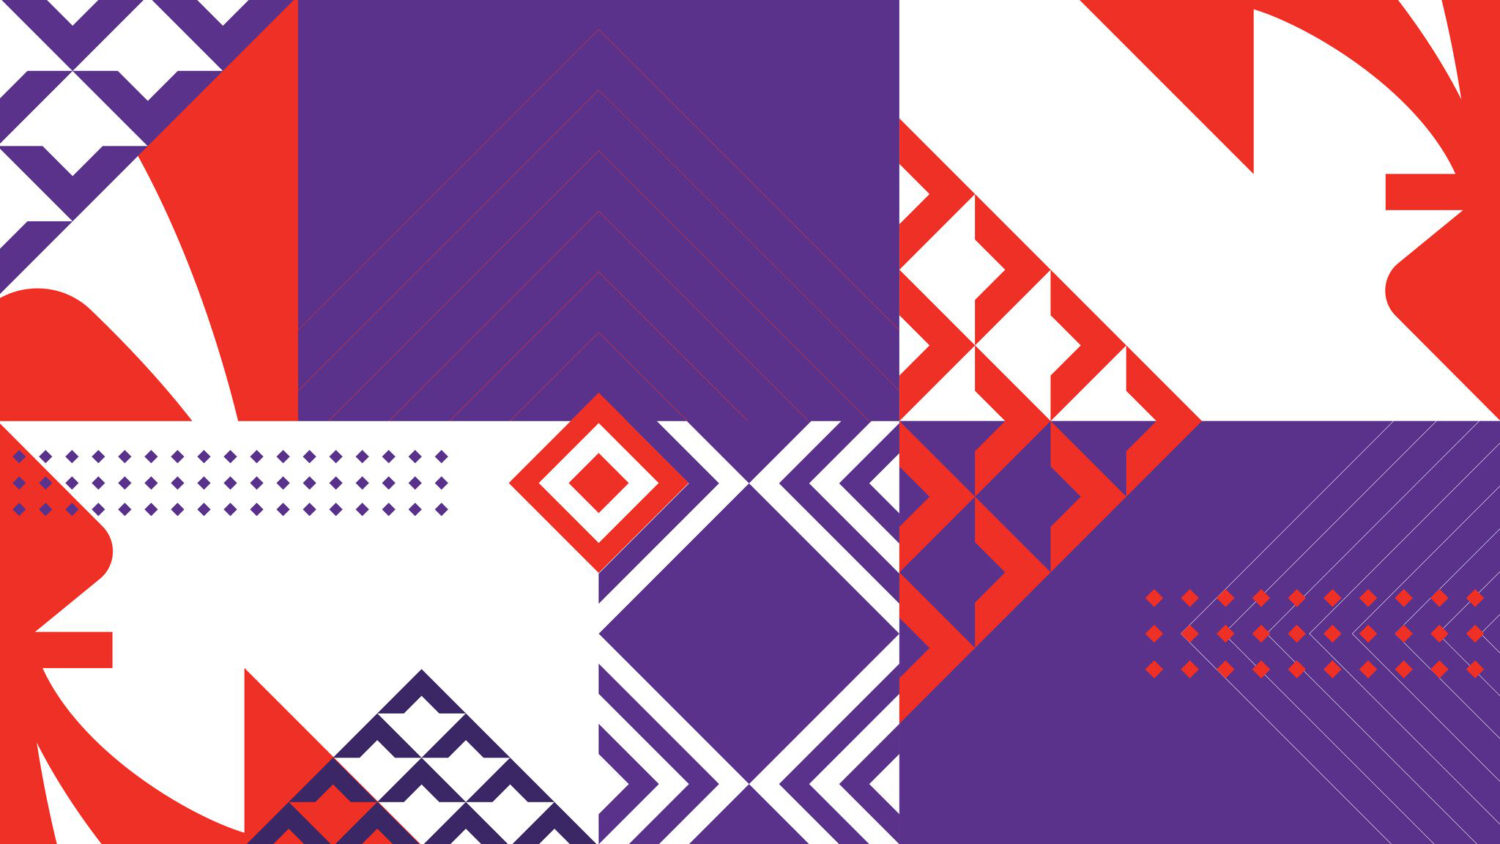 ACF Fiorentina Branding / Visual